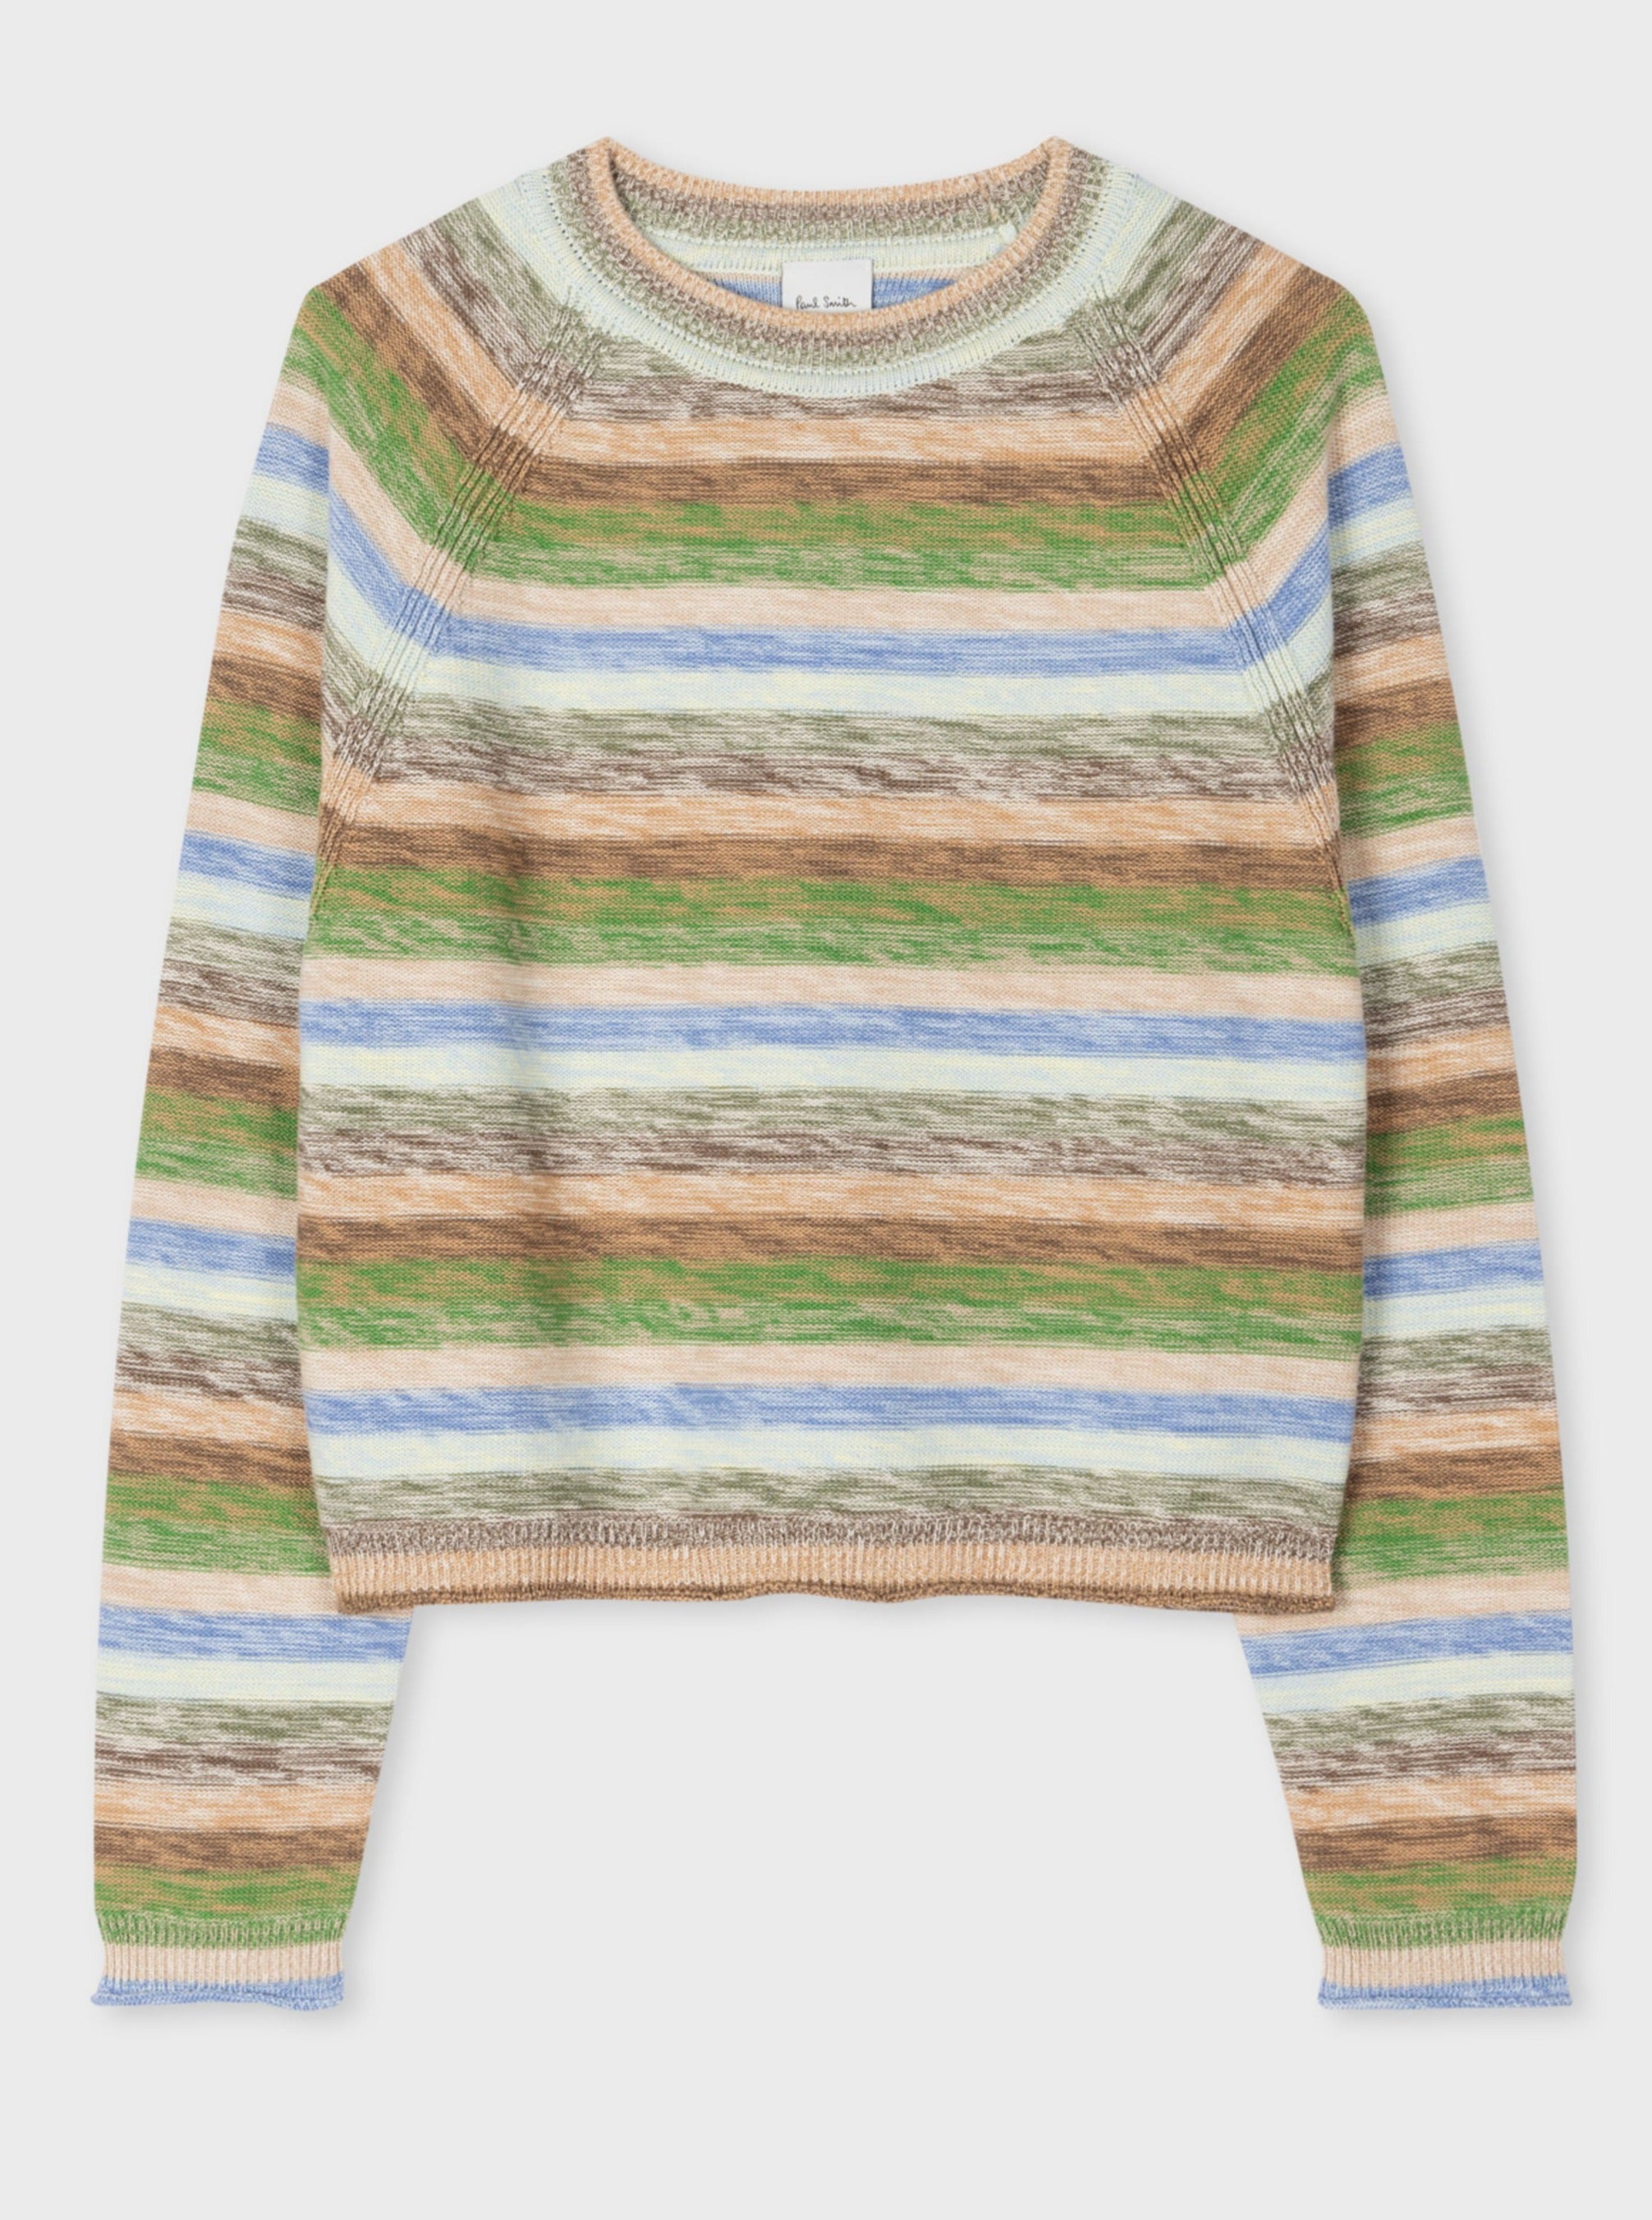 Paul Smith 'Space Dye' Sweater